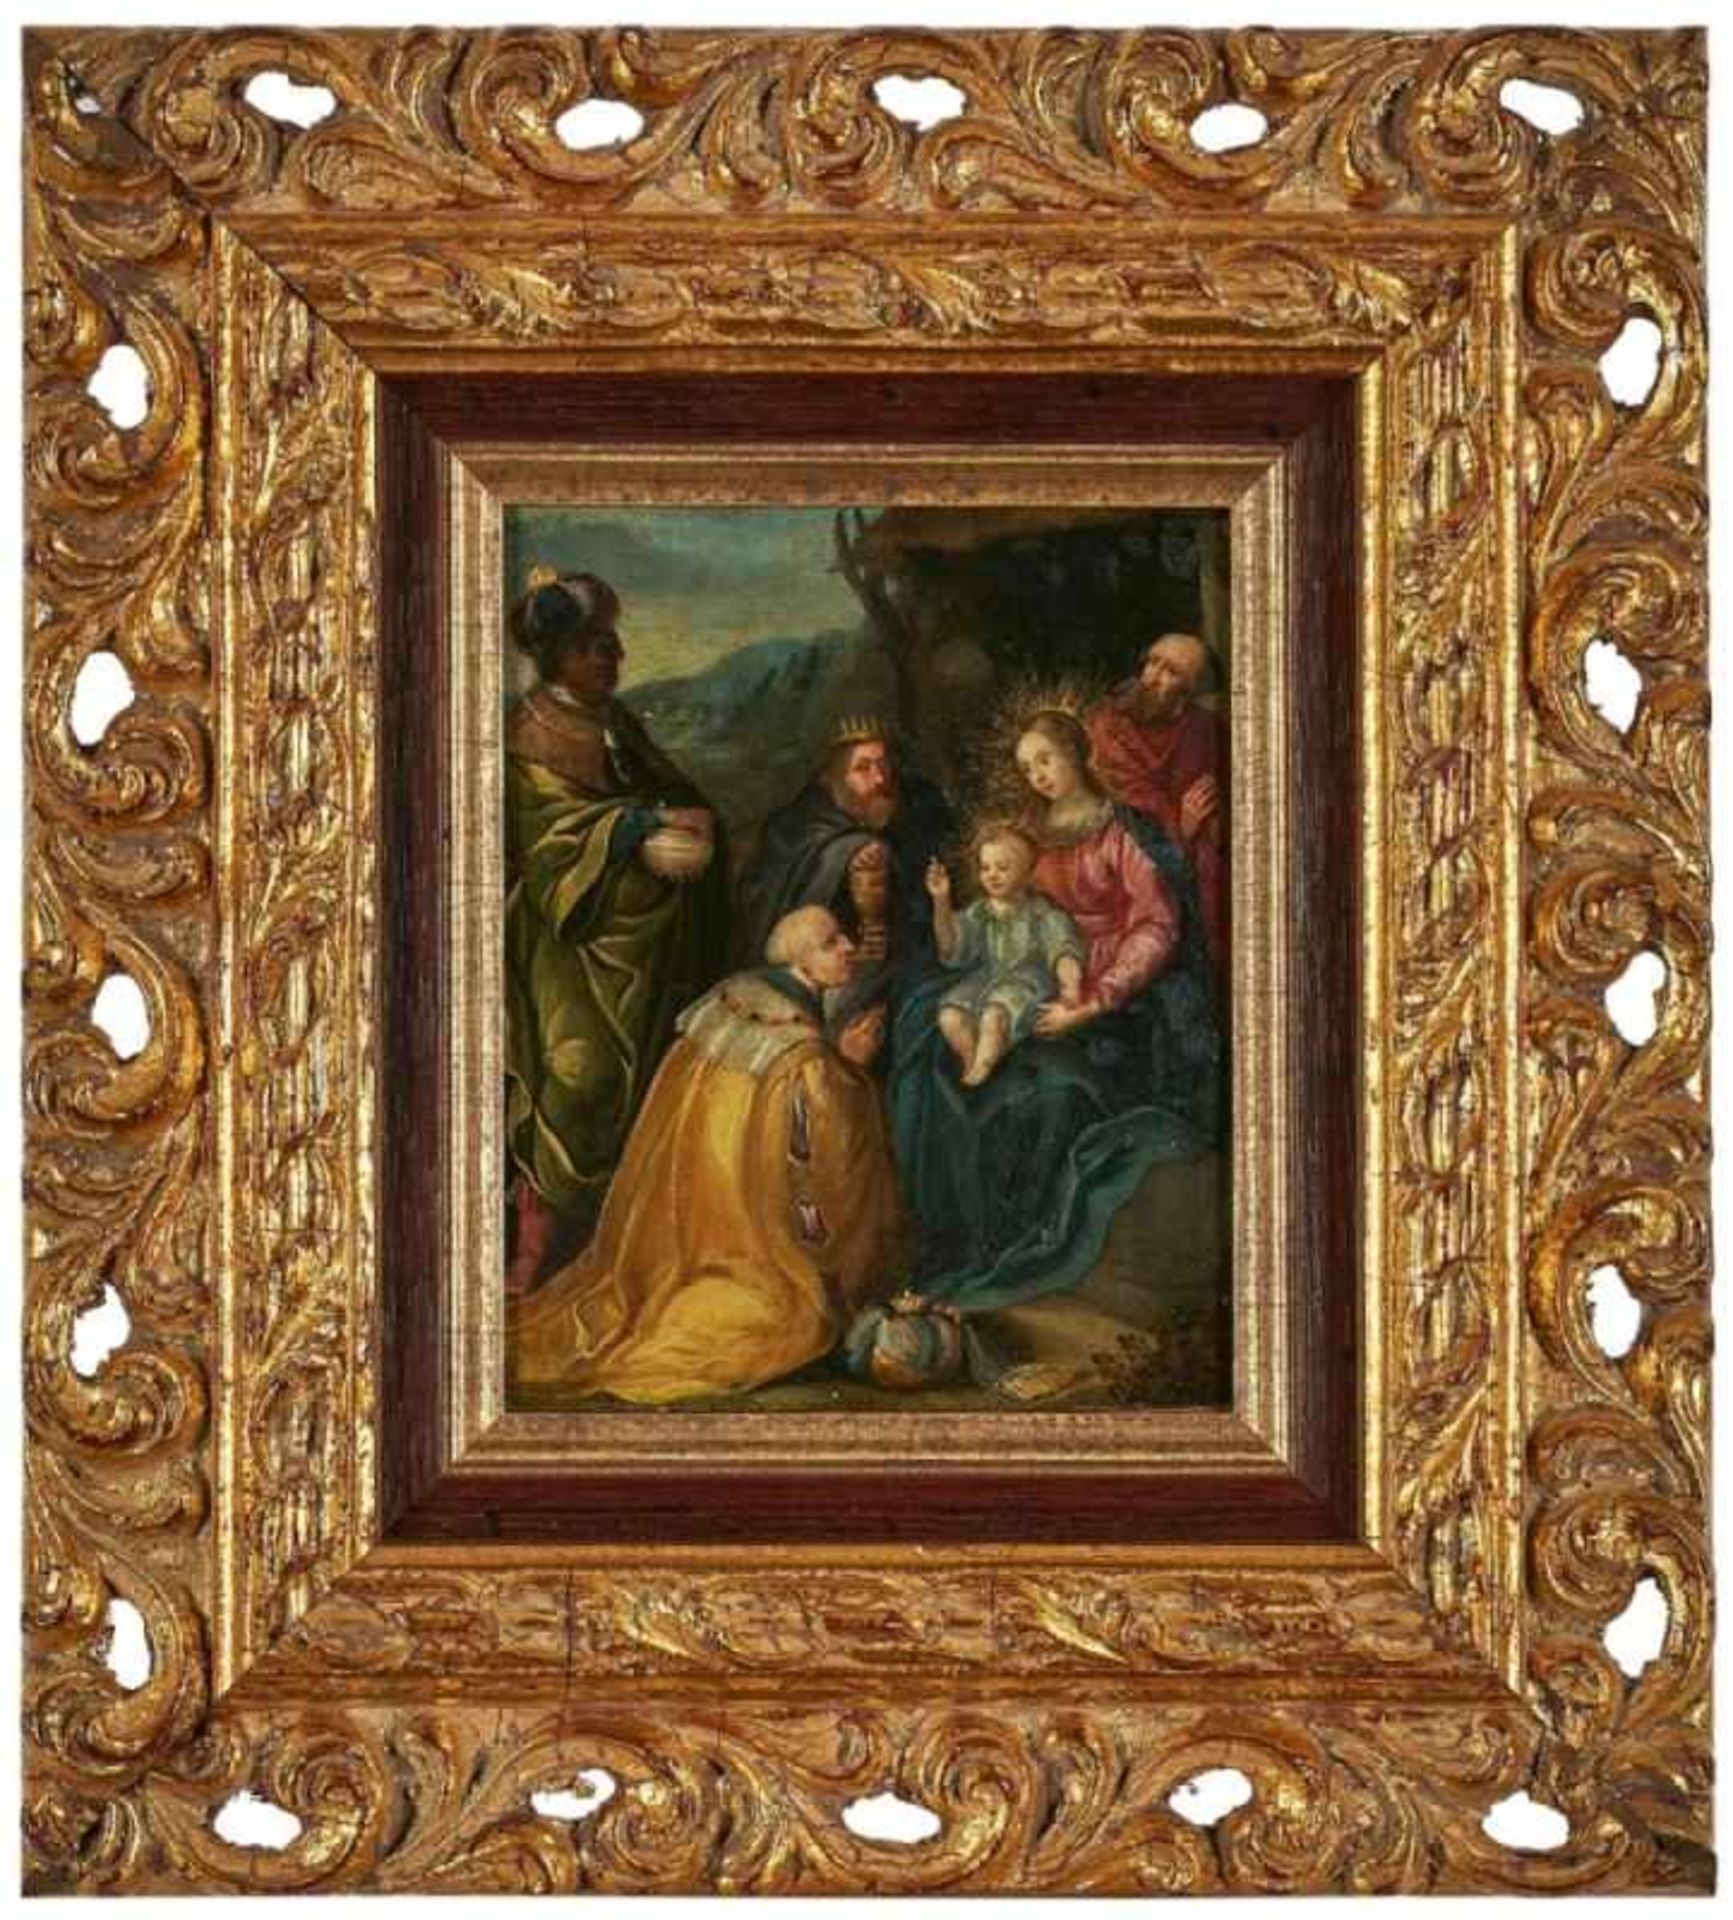 Gemälde Frans Francken d. Jüngere, zugeschrieben 1581 Antwerpen - 1642 Antwerpen "Anbetung des - Image 2 of 2